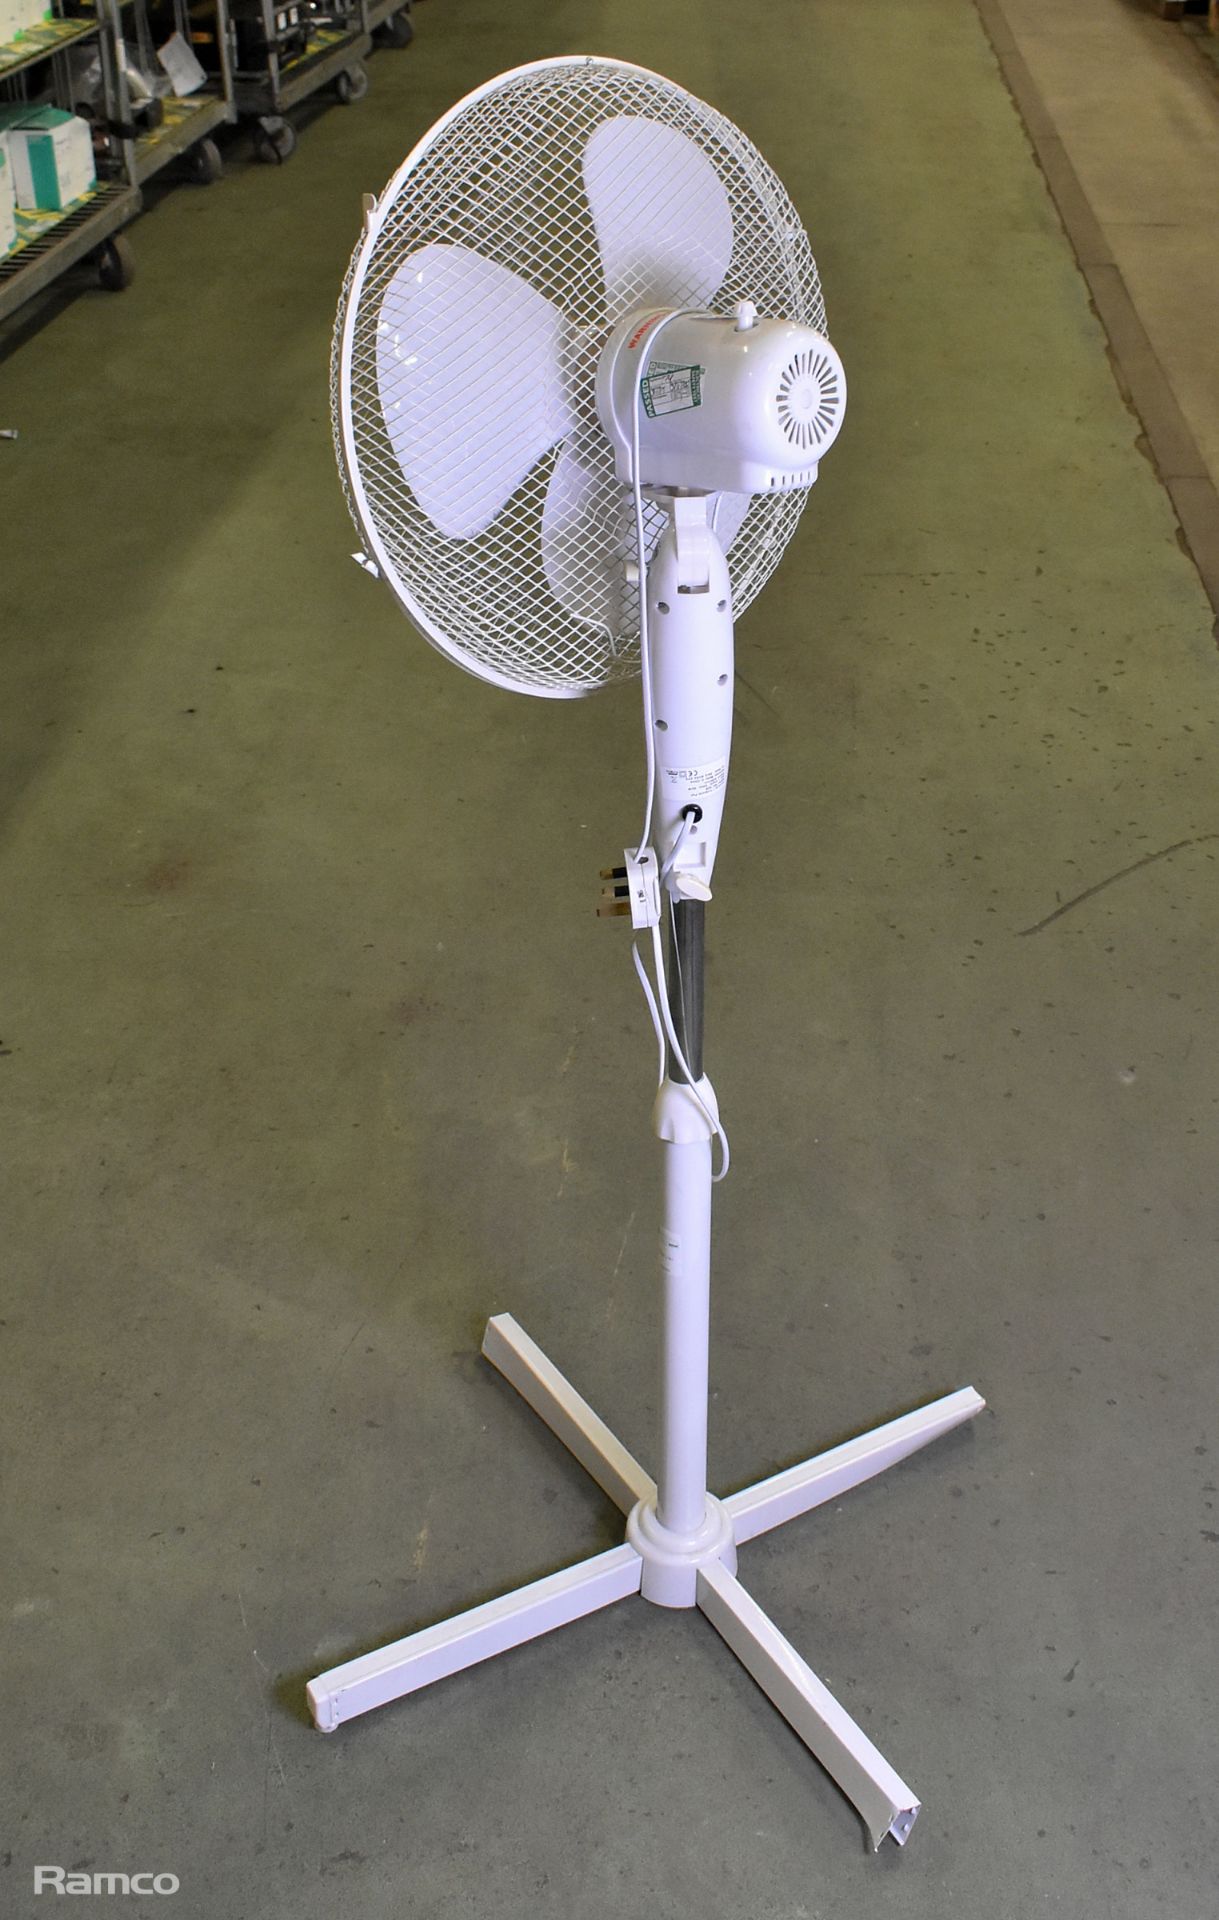 Freestanding electric fan - 240V - Image 2 of 3